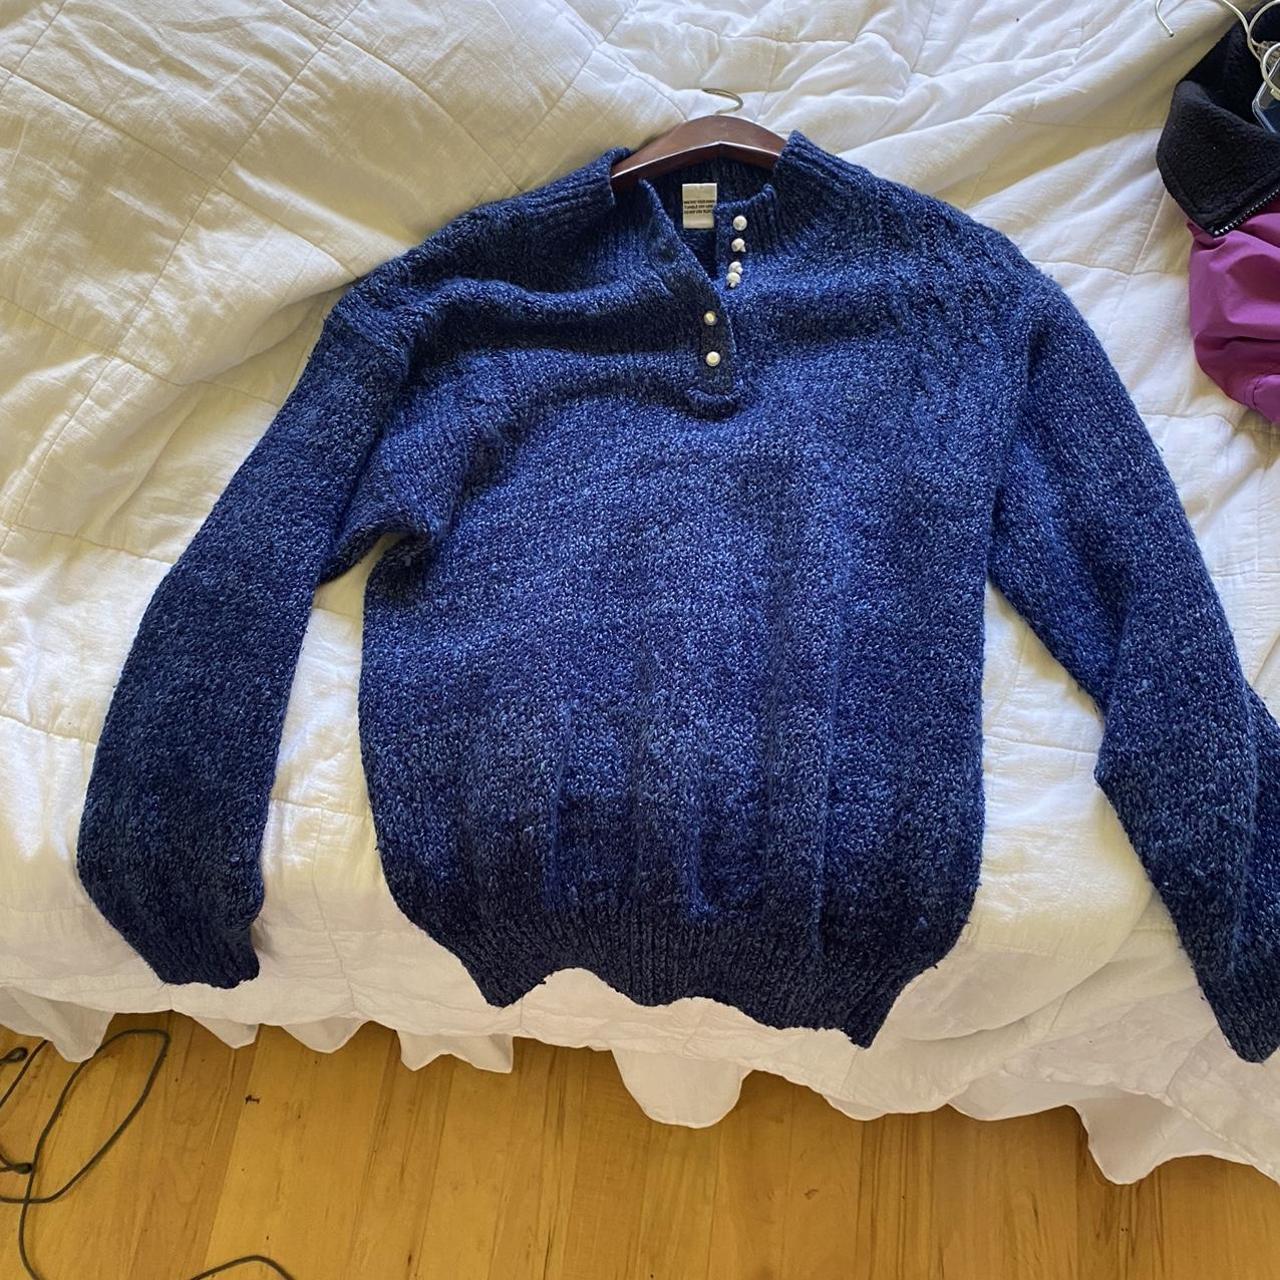 Bermuda run vintage sweater size medium #vintage... - Depop